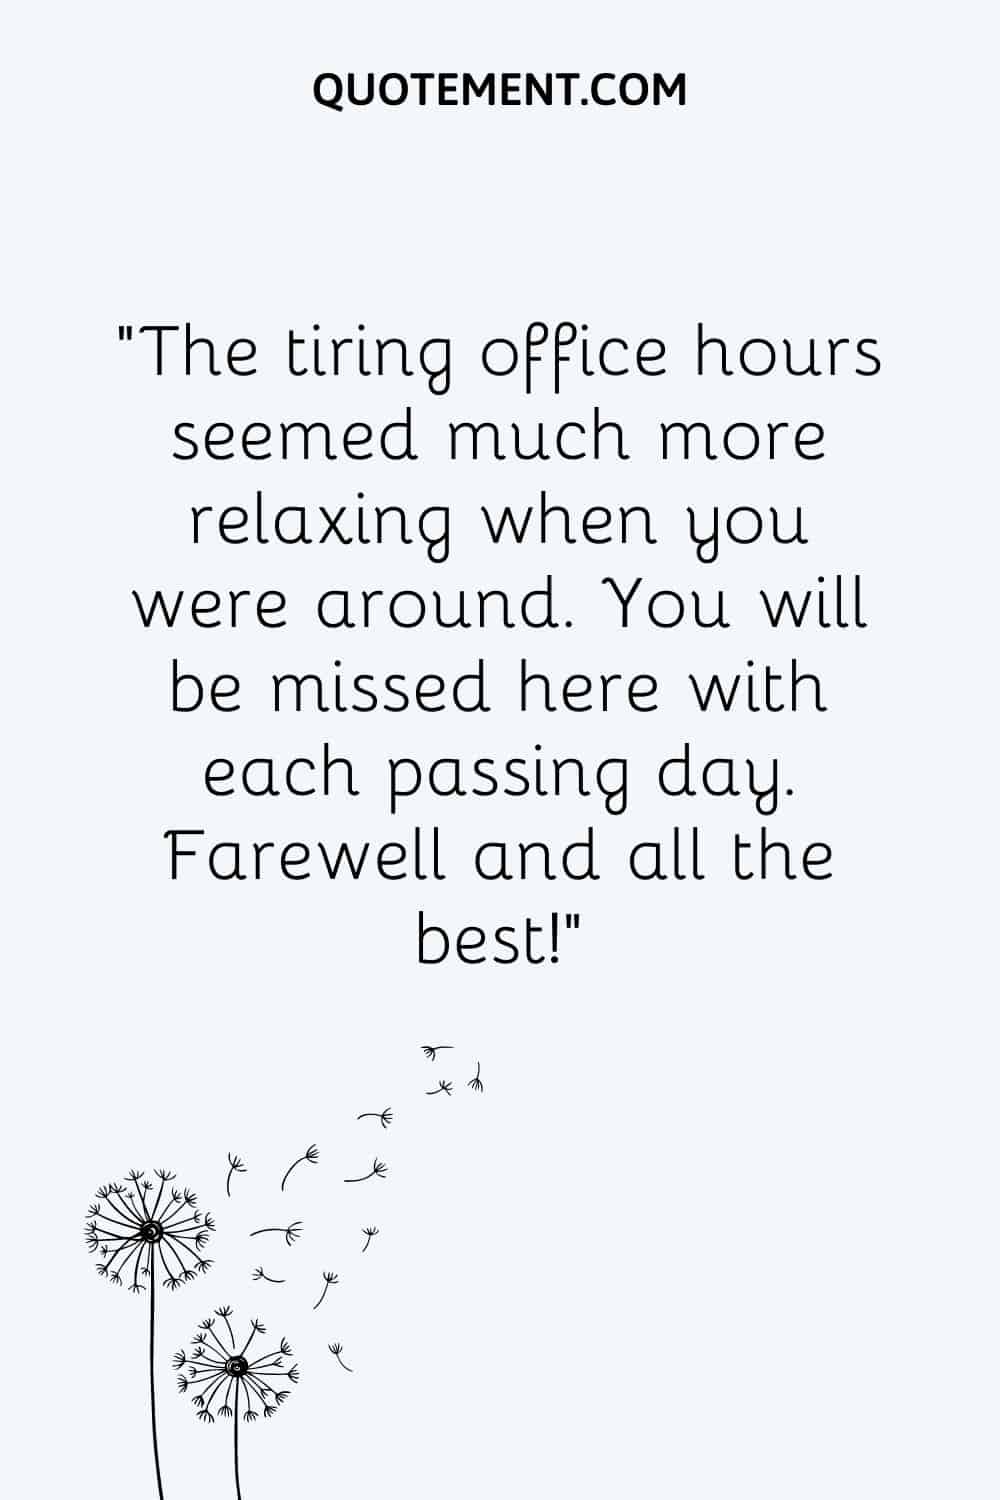 two dandelions illustration representing heartfelt goodbye message to coworker